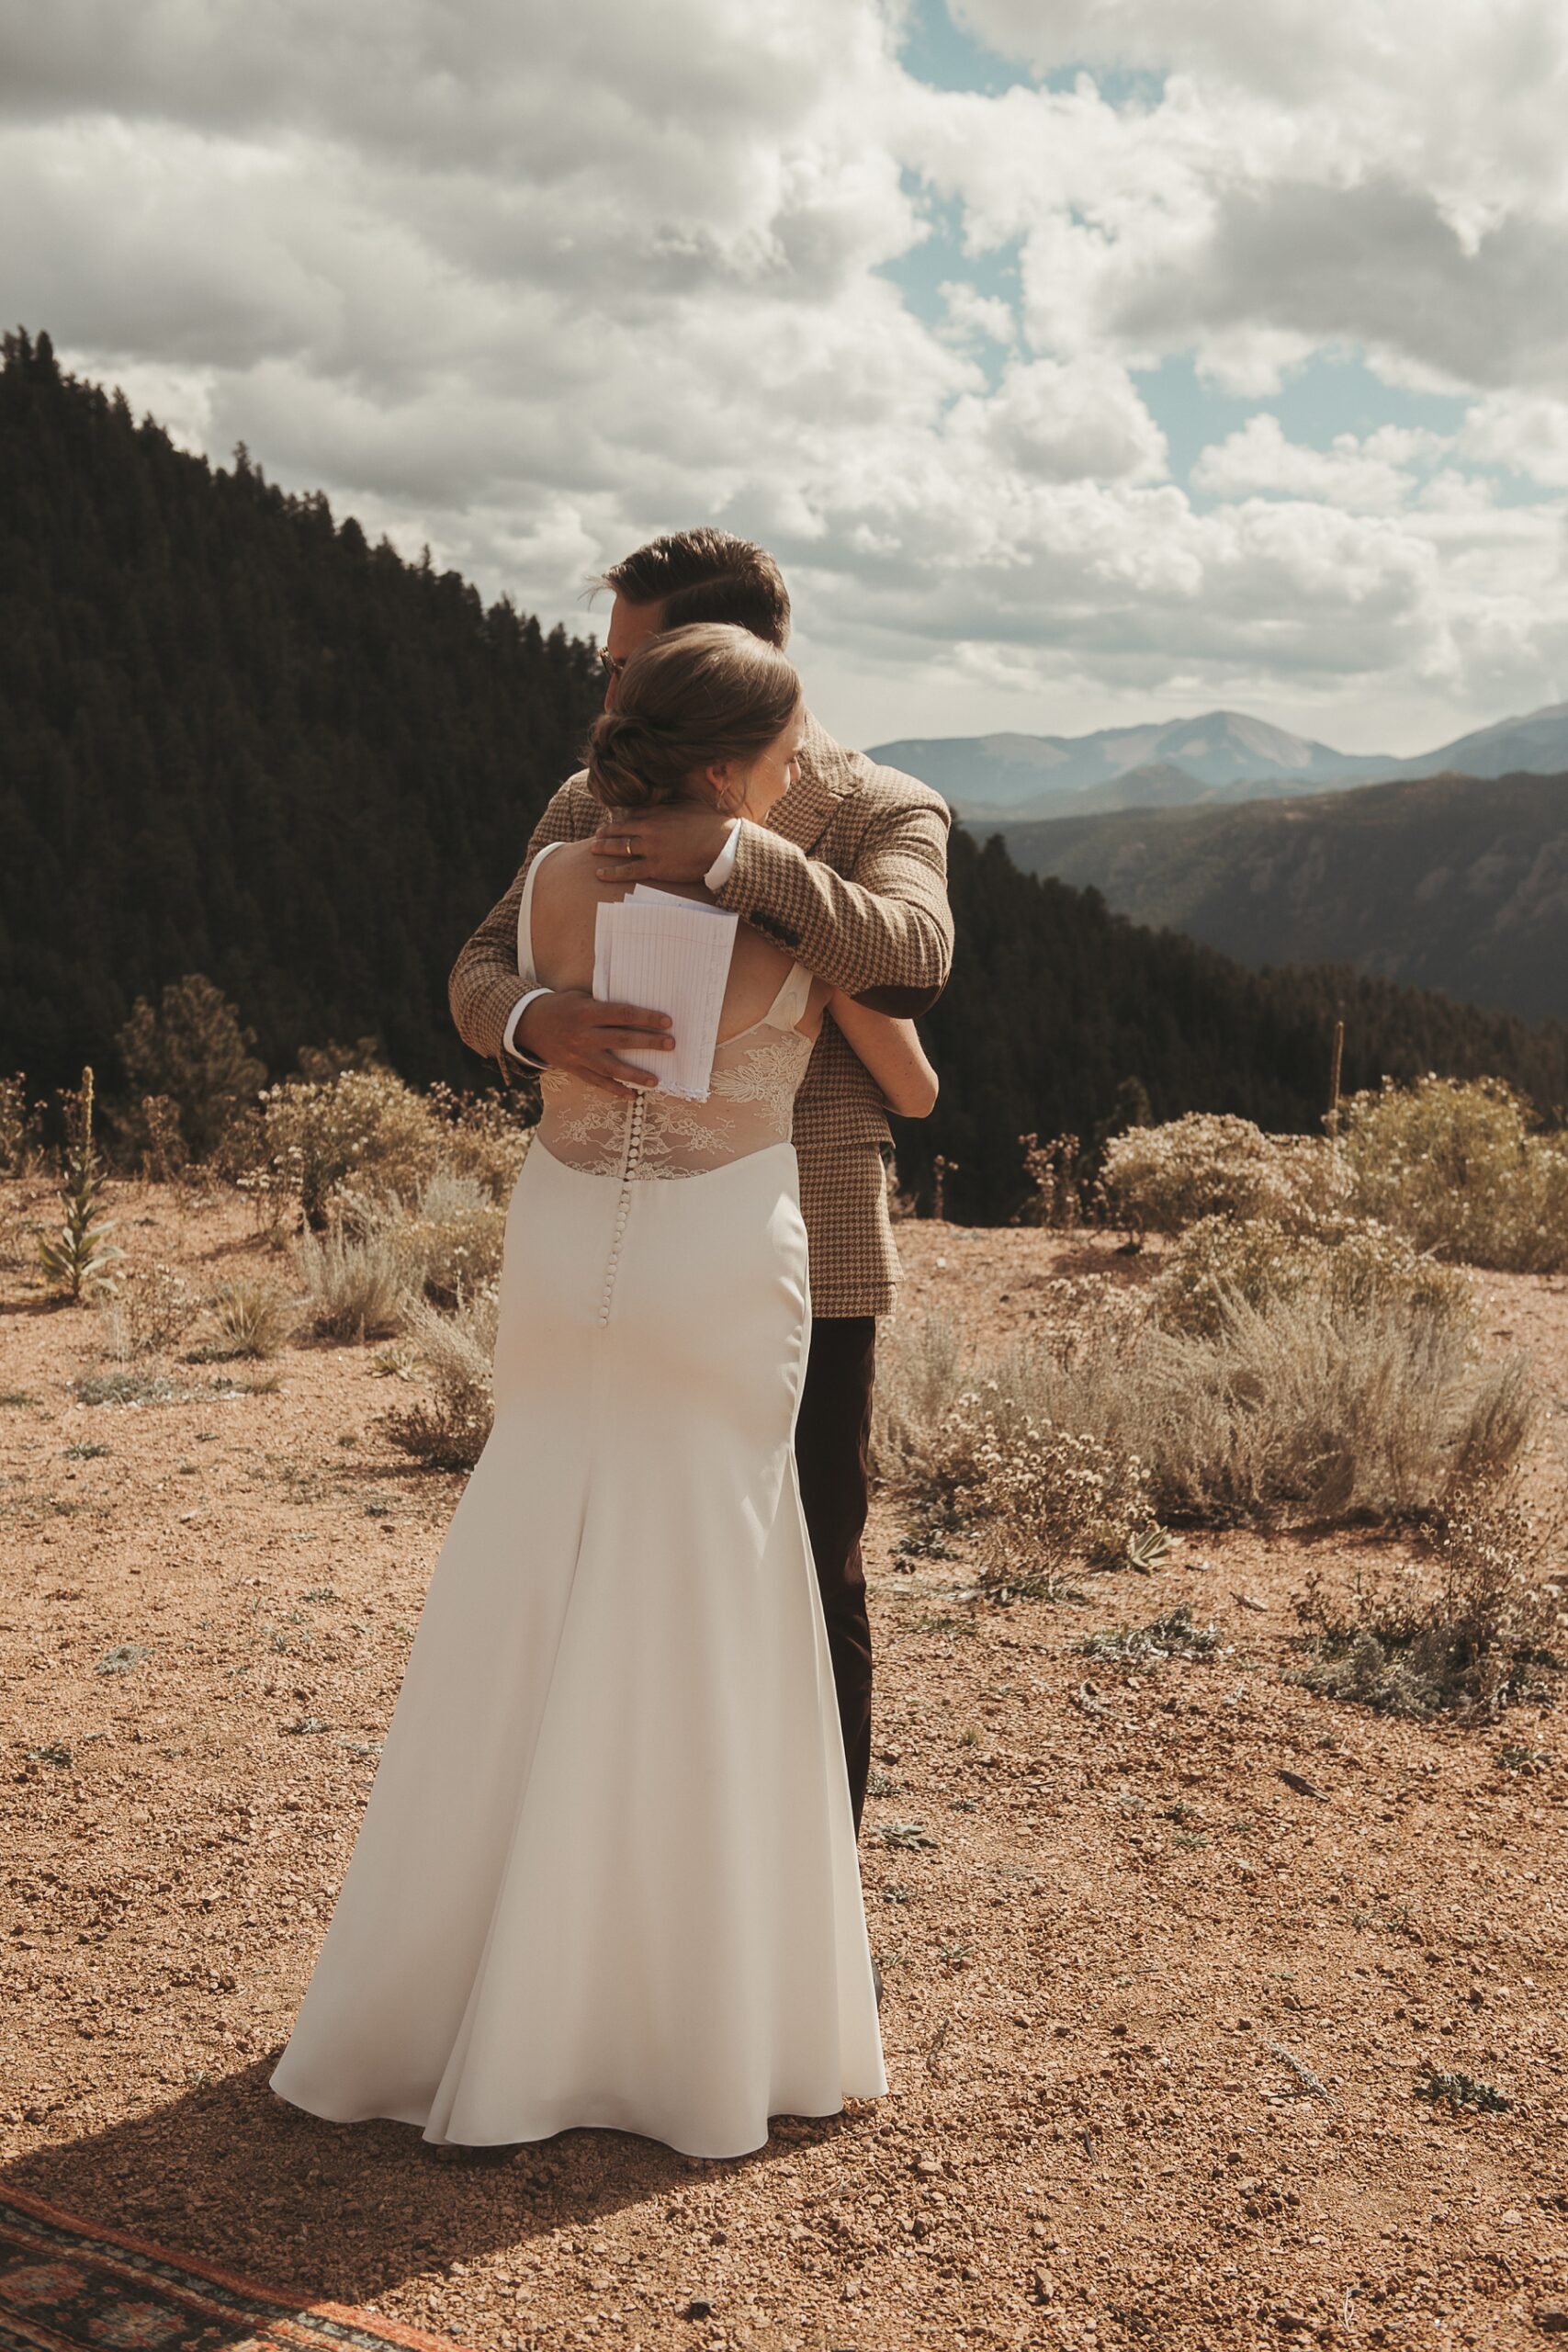 Bride and groom hugging at first look at Airbnb wedding venue in Colorado